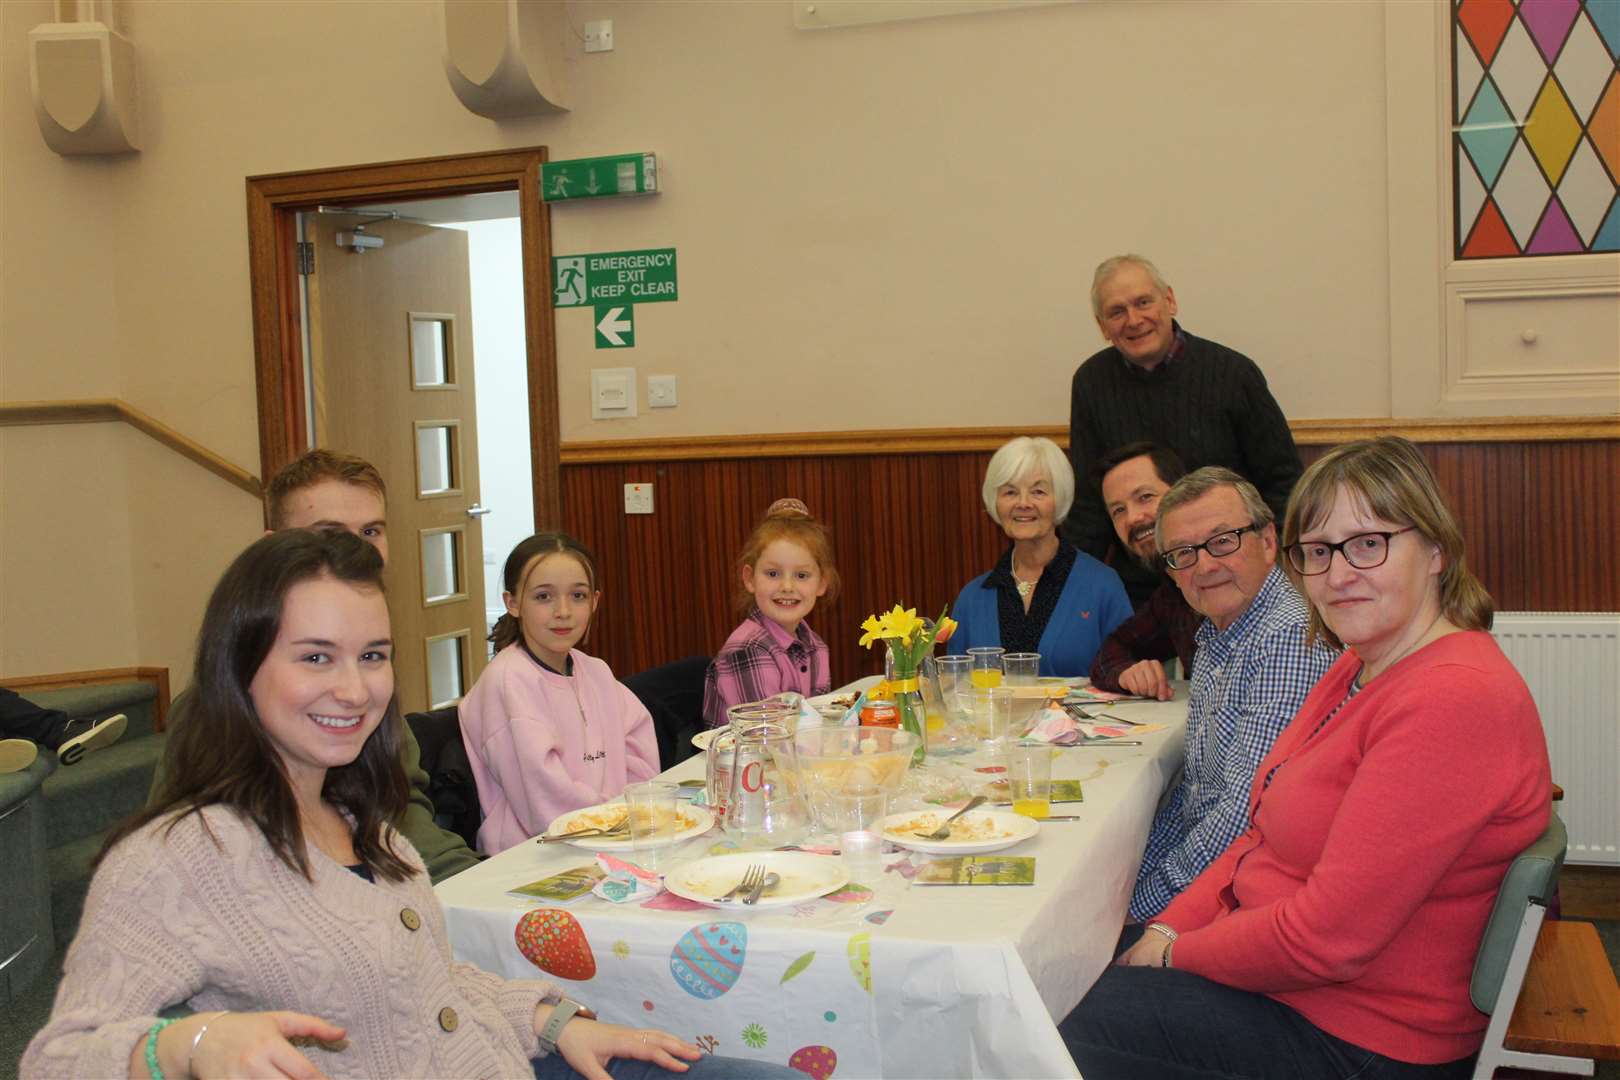 Guests were welcomed by Gospel hall elder Stephen Rankin and enjoyed an Easter-themed dinner on Friday evening.. Picture: Griselda McGregor